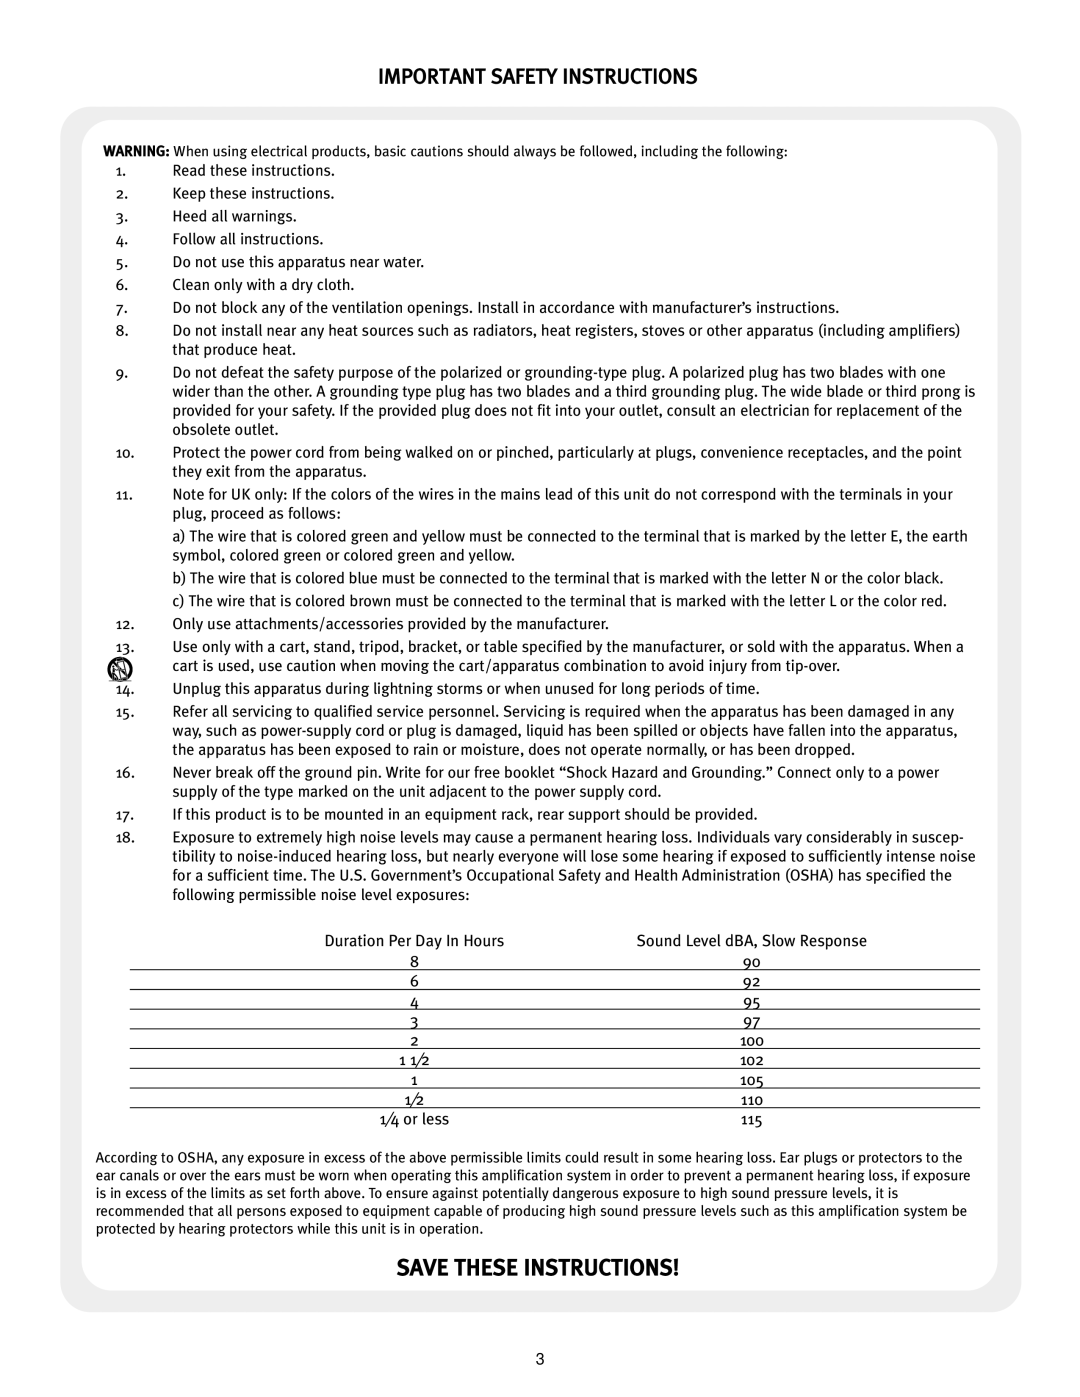 Peavey PR 15P manual Important Safety Instructions, Sound Level dBA, Slow Response 